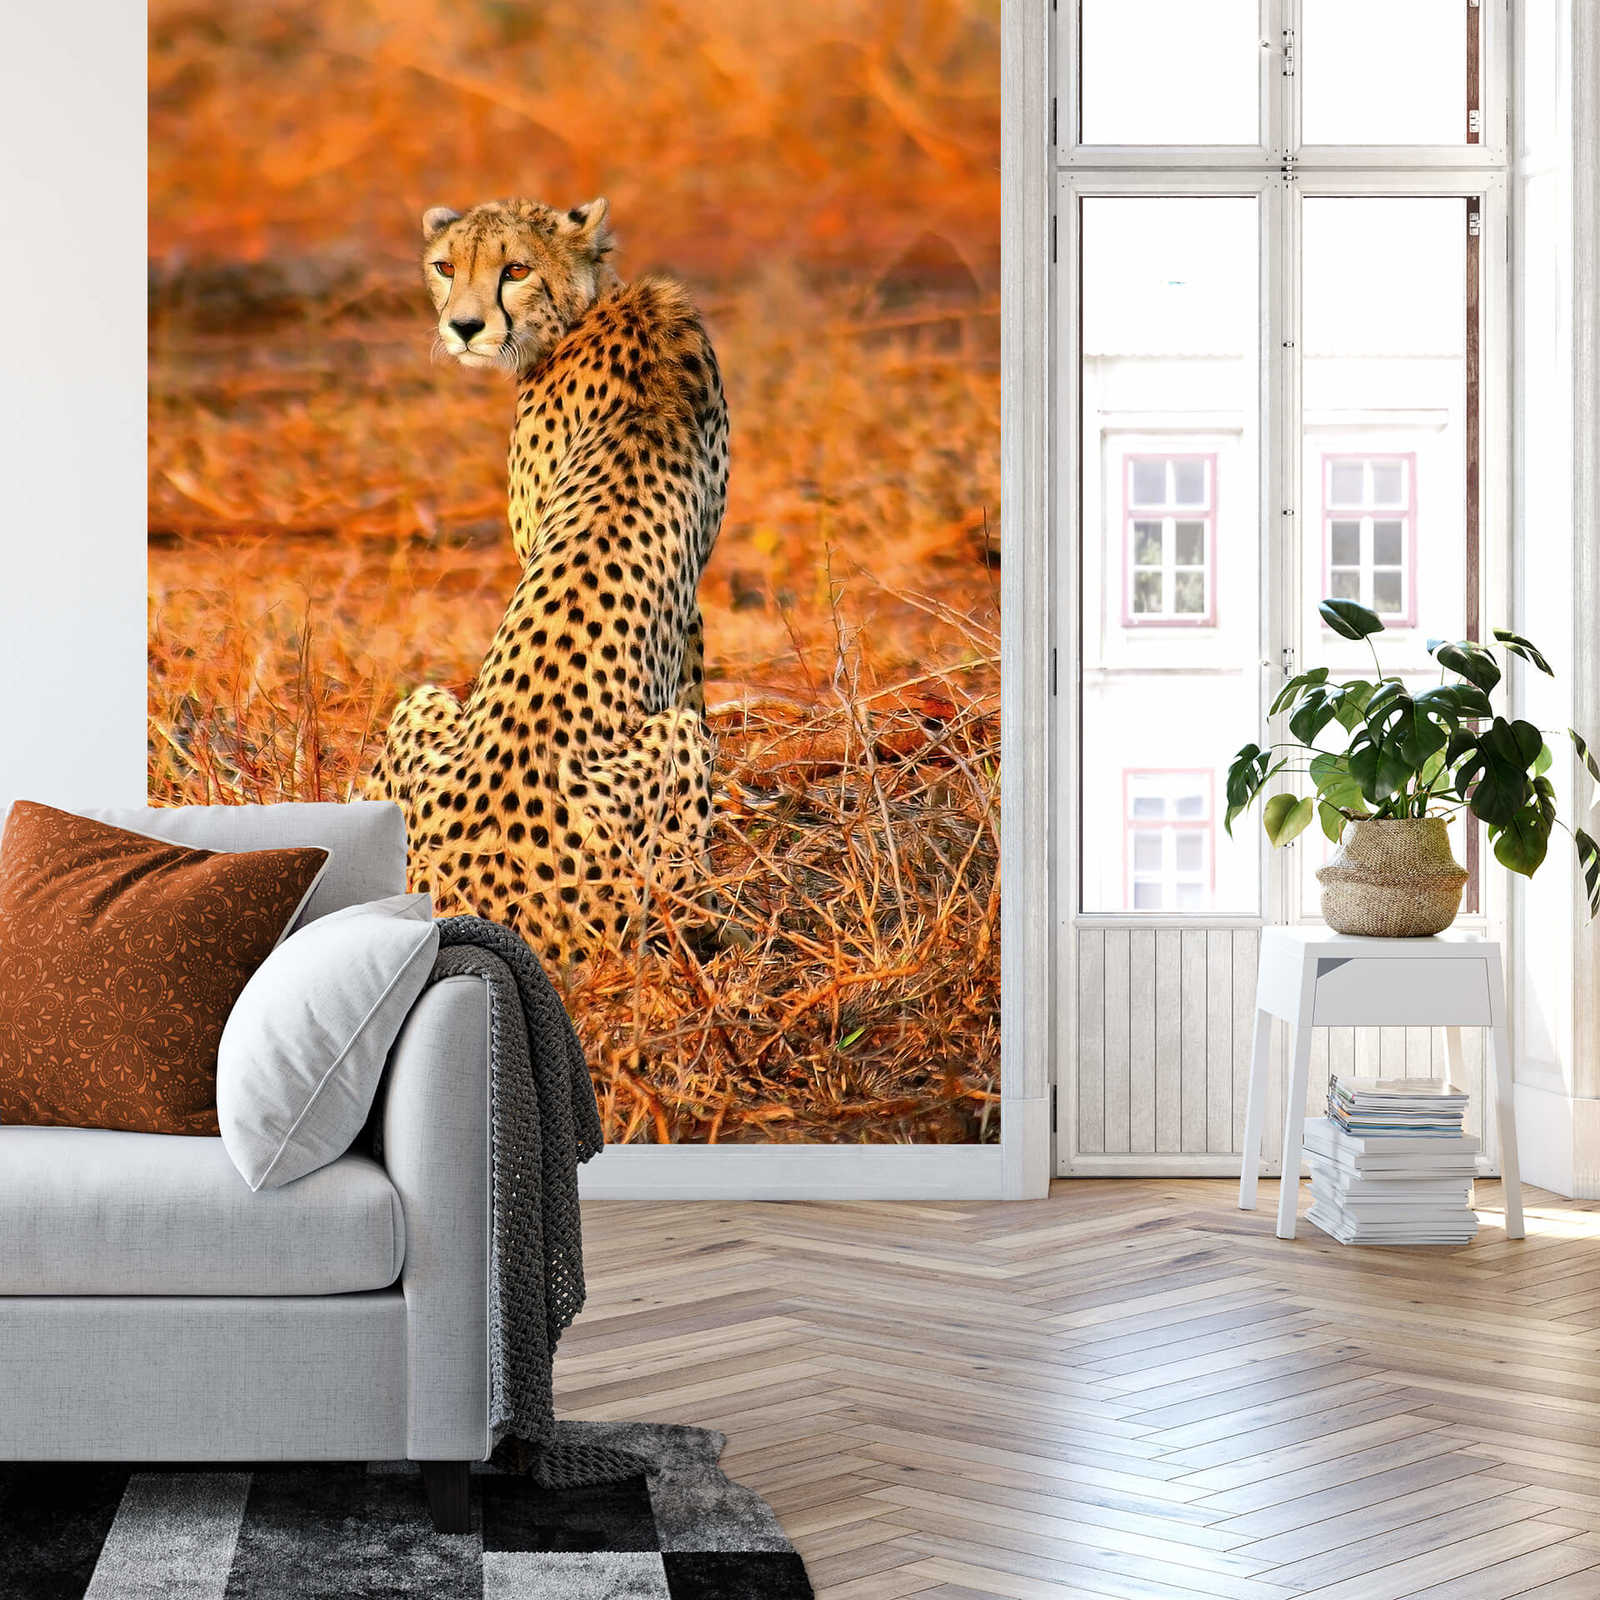             Safari Papier peint animal léopard - jaune, orange, noir
        